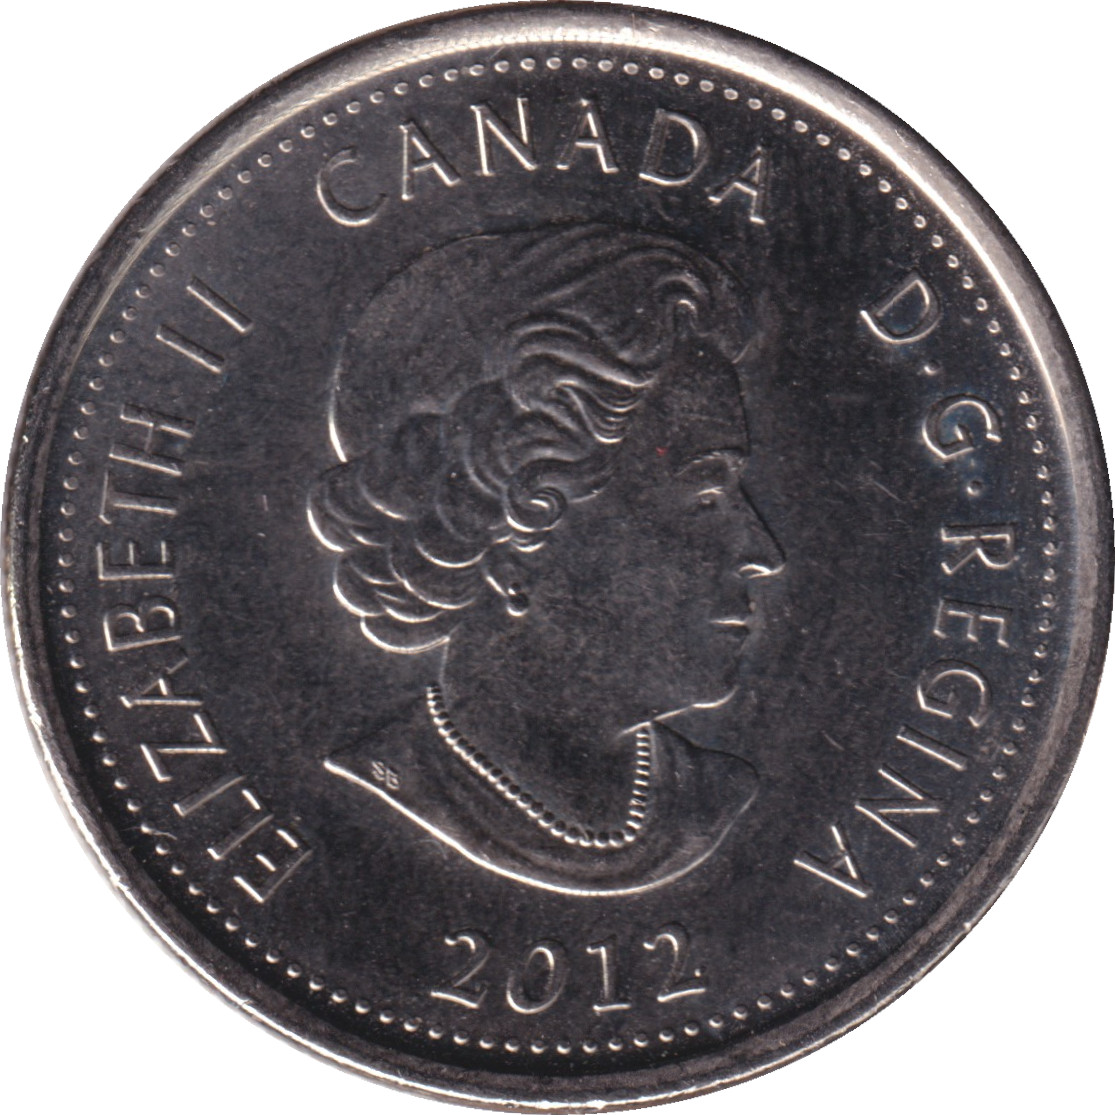 25 cents - Tecumseh